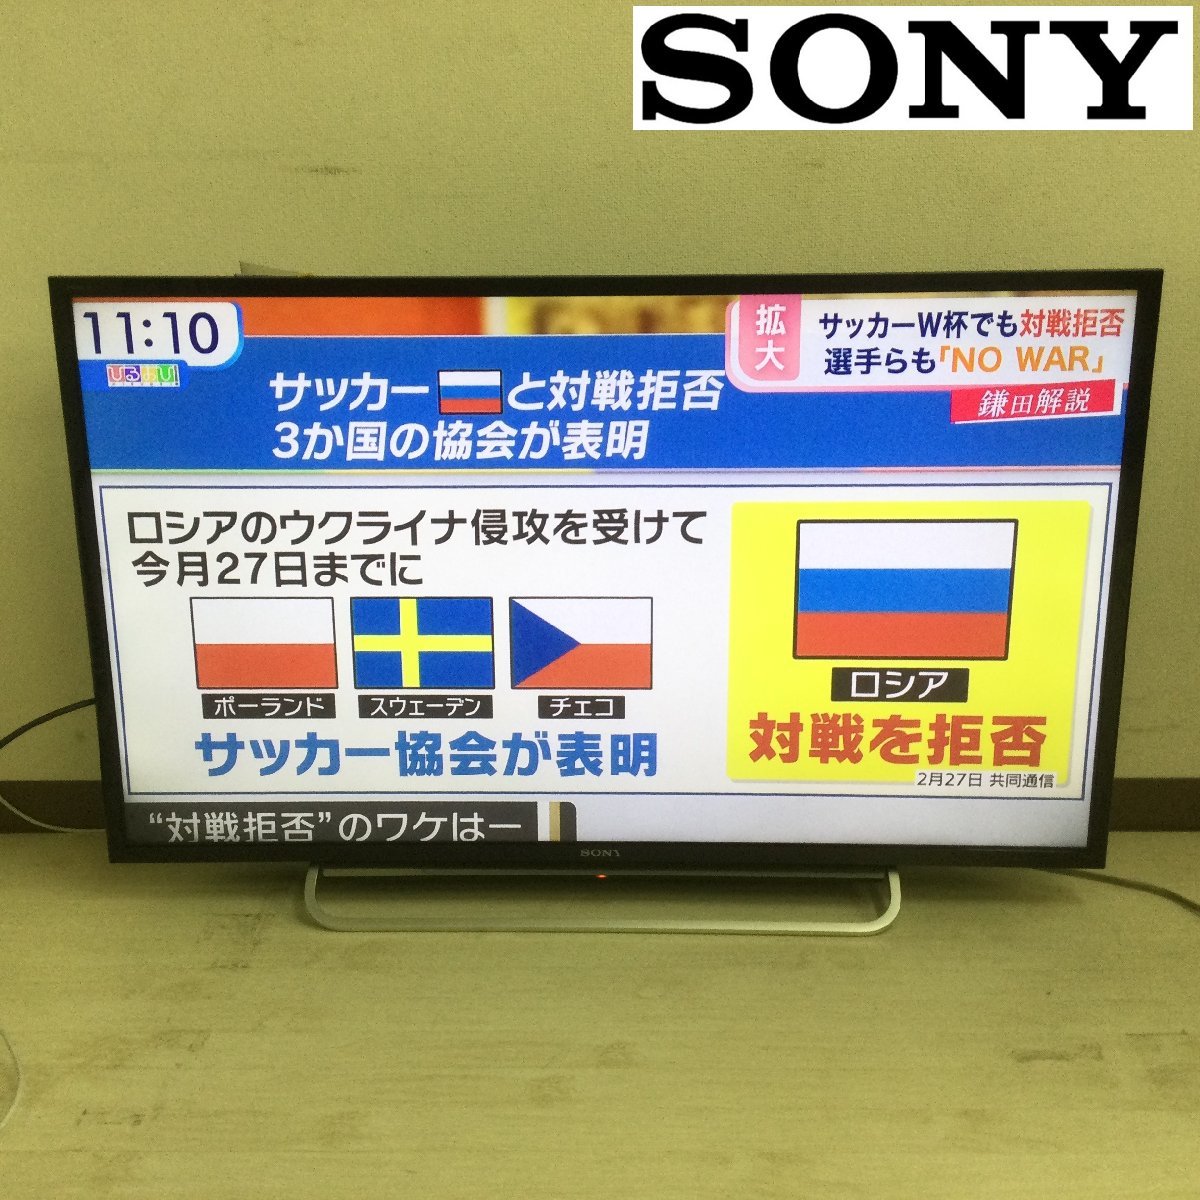 SONY BRAVIA ソニー ブラビア 液晶テレビ KDL-40W600B 40V型 2015年製 